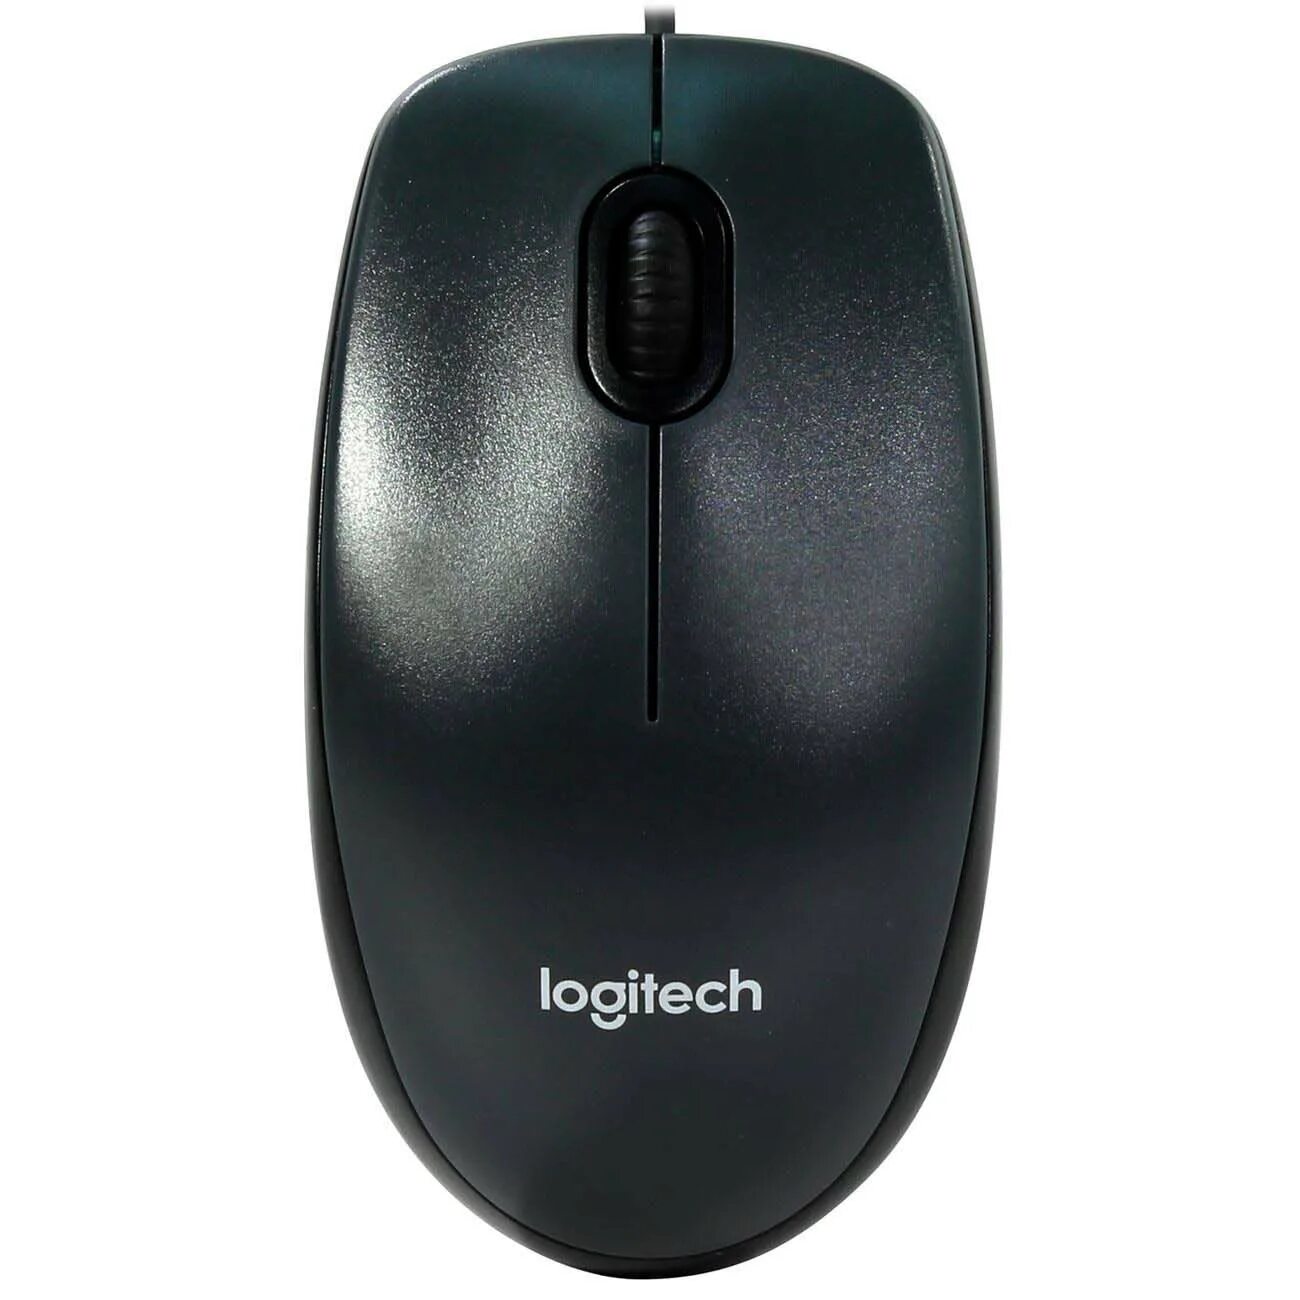 Черная белая компьютерная мышь. Мышь Logitech b100 USB Black 910-003357. Мышь Logitech b100 Black USB. Мышь проводная Logitech b100. Мышь Logitech Optical Mouse b100 Black USB.